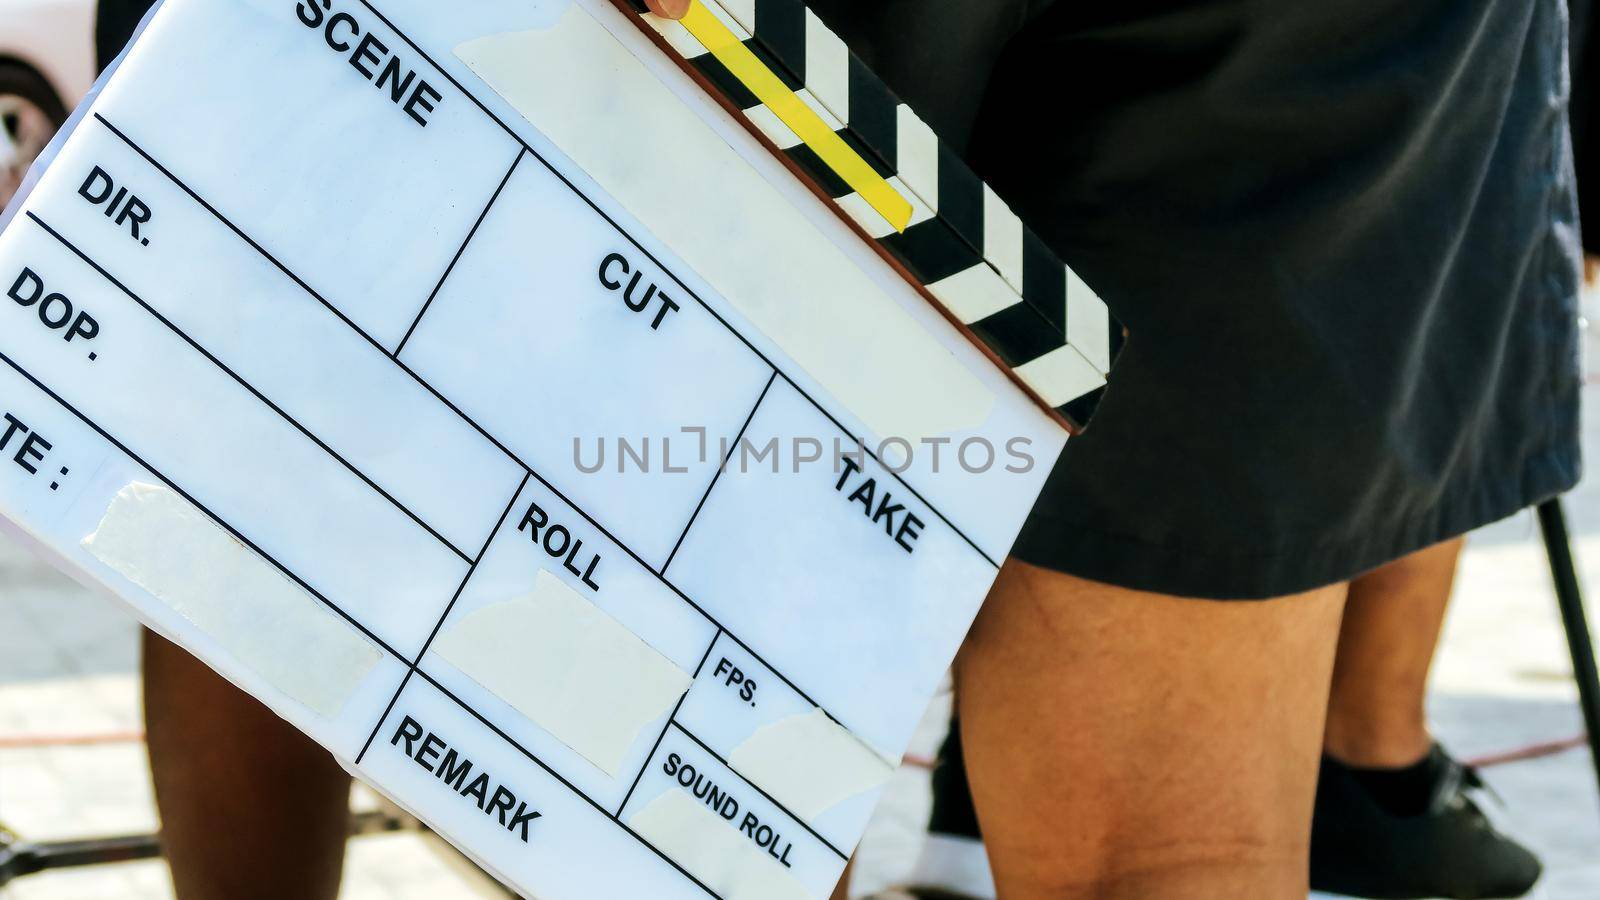 film crew production set by ponsulak